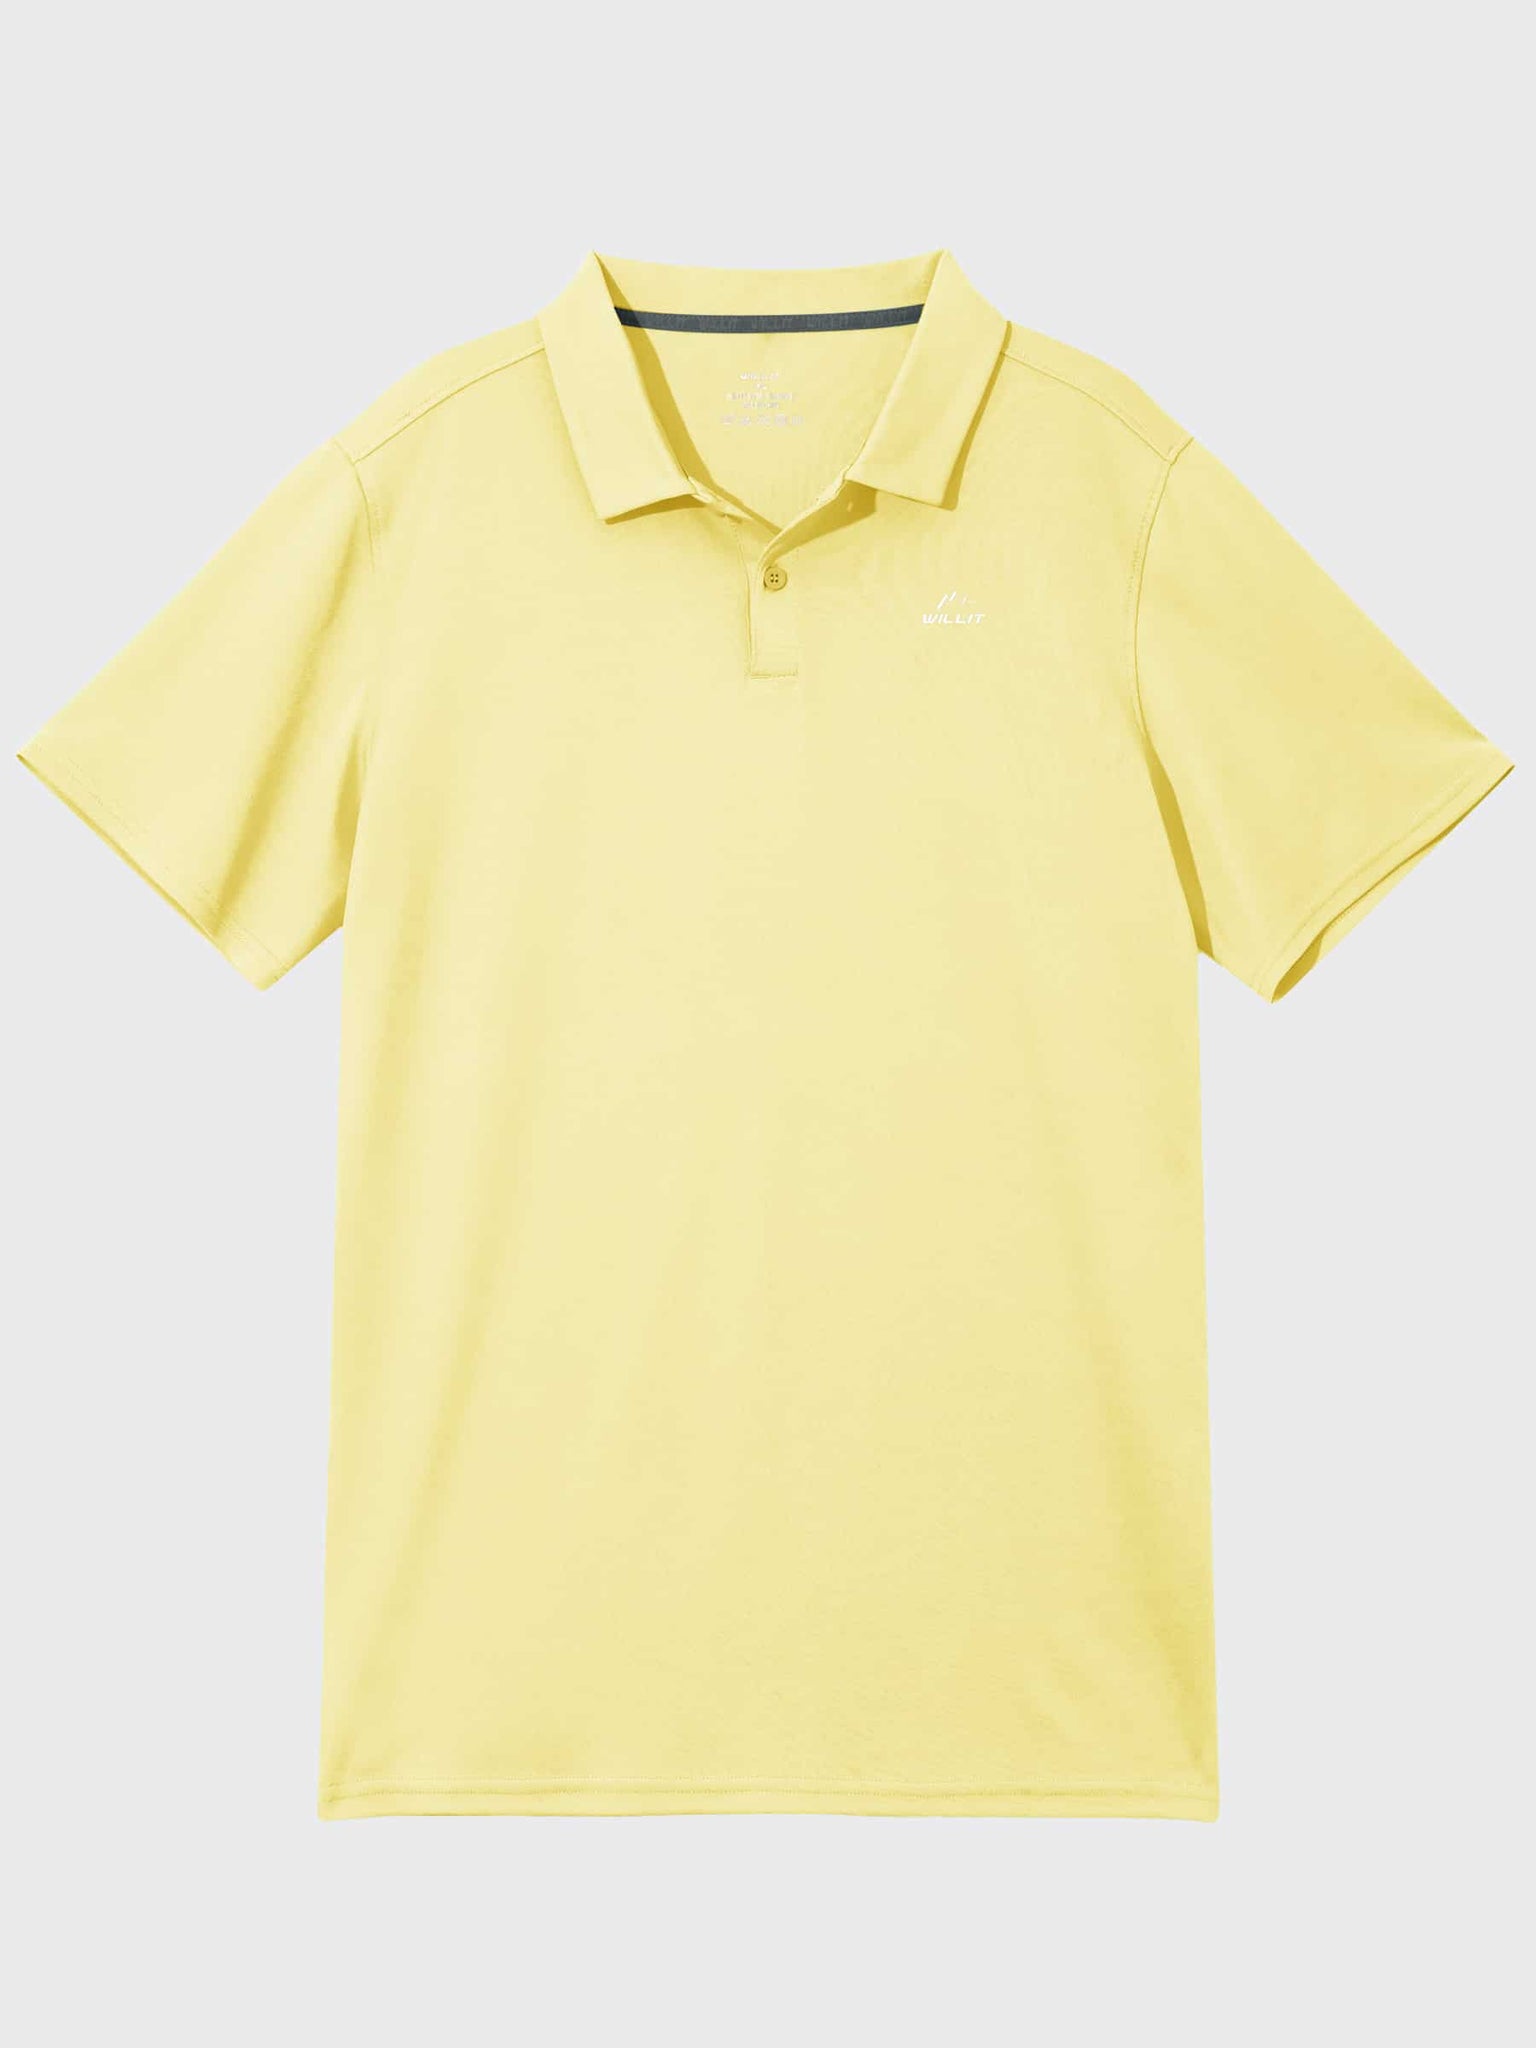 Youth Golf Polo Sun Shirts_Yellow_laydown4